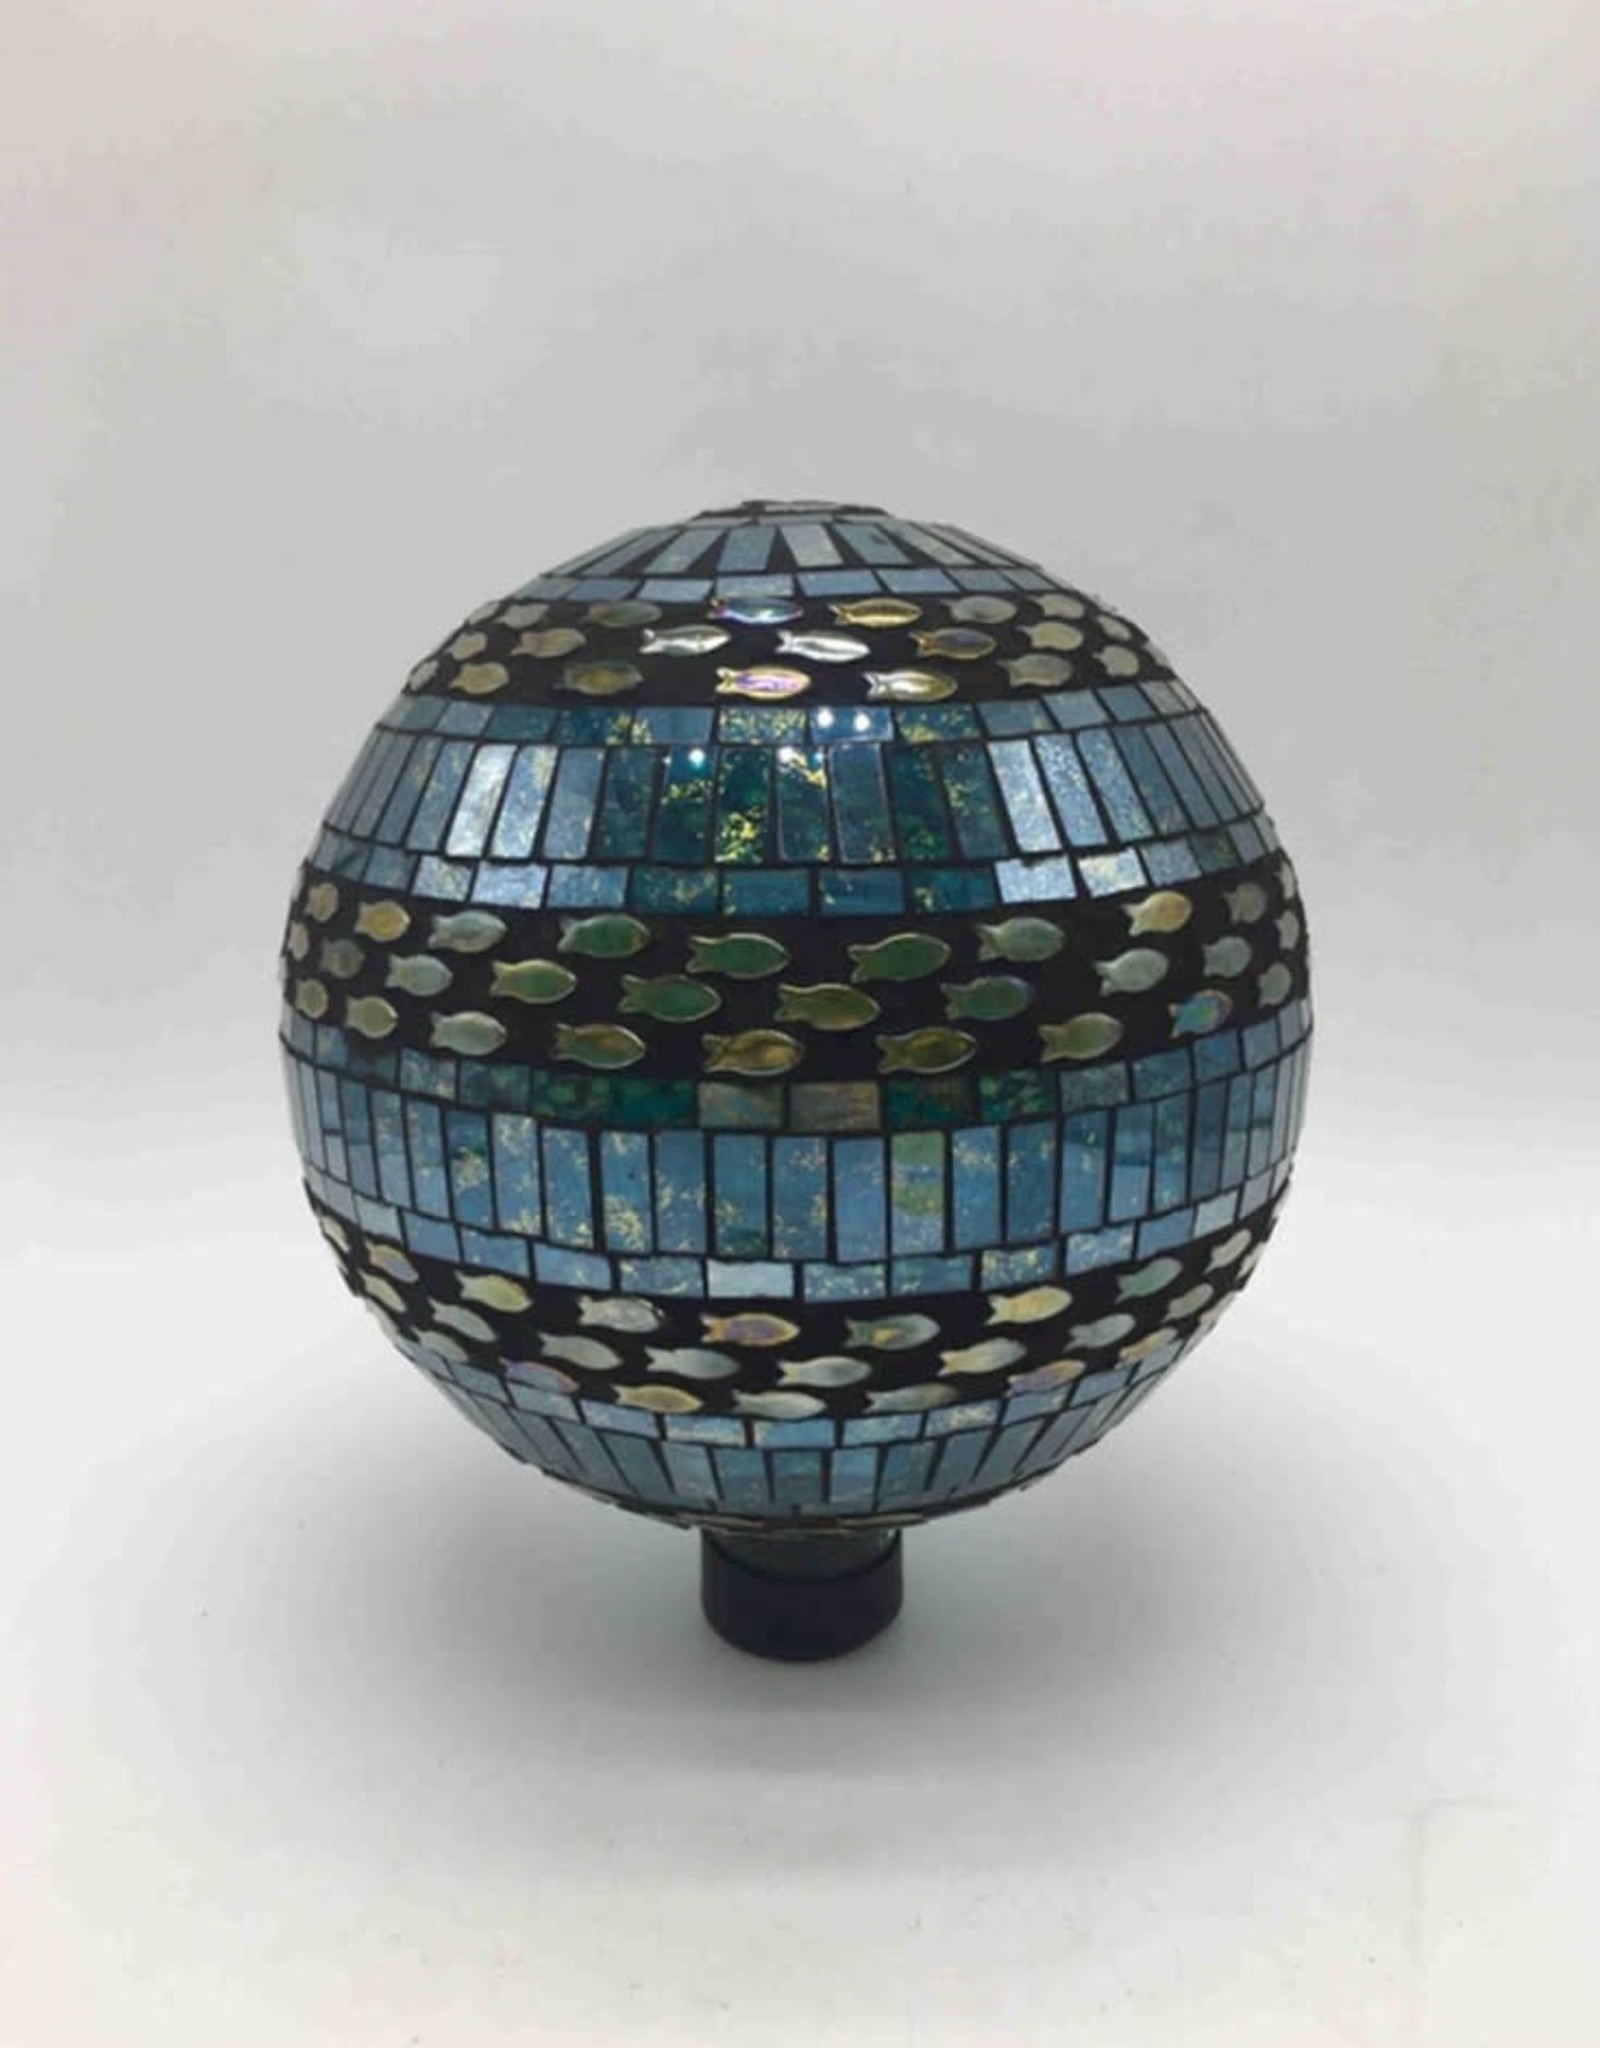 10 inch Gazing Ball Mosaic Glass mosaic Fish- Blue Handmade